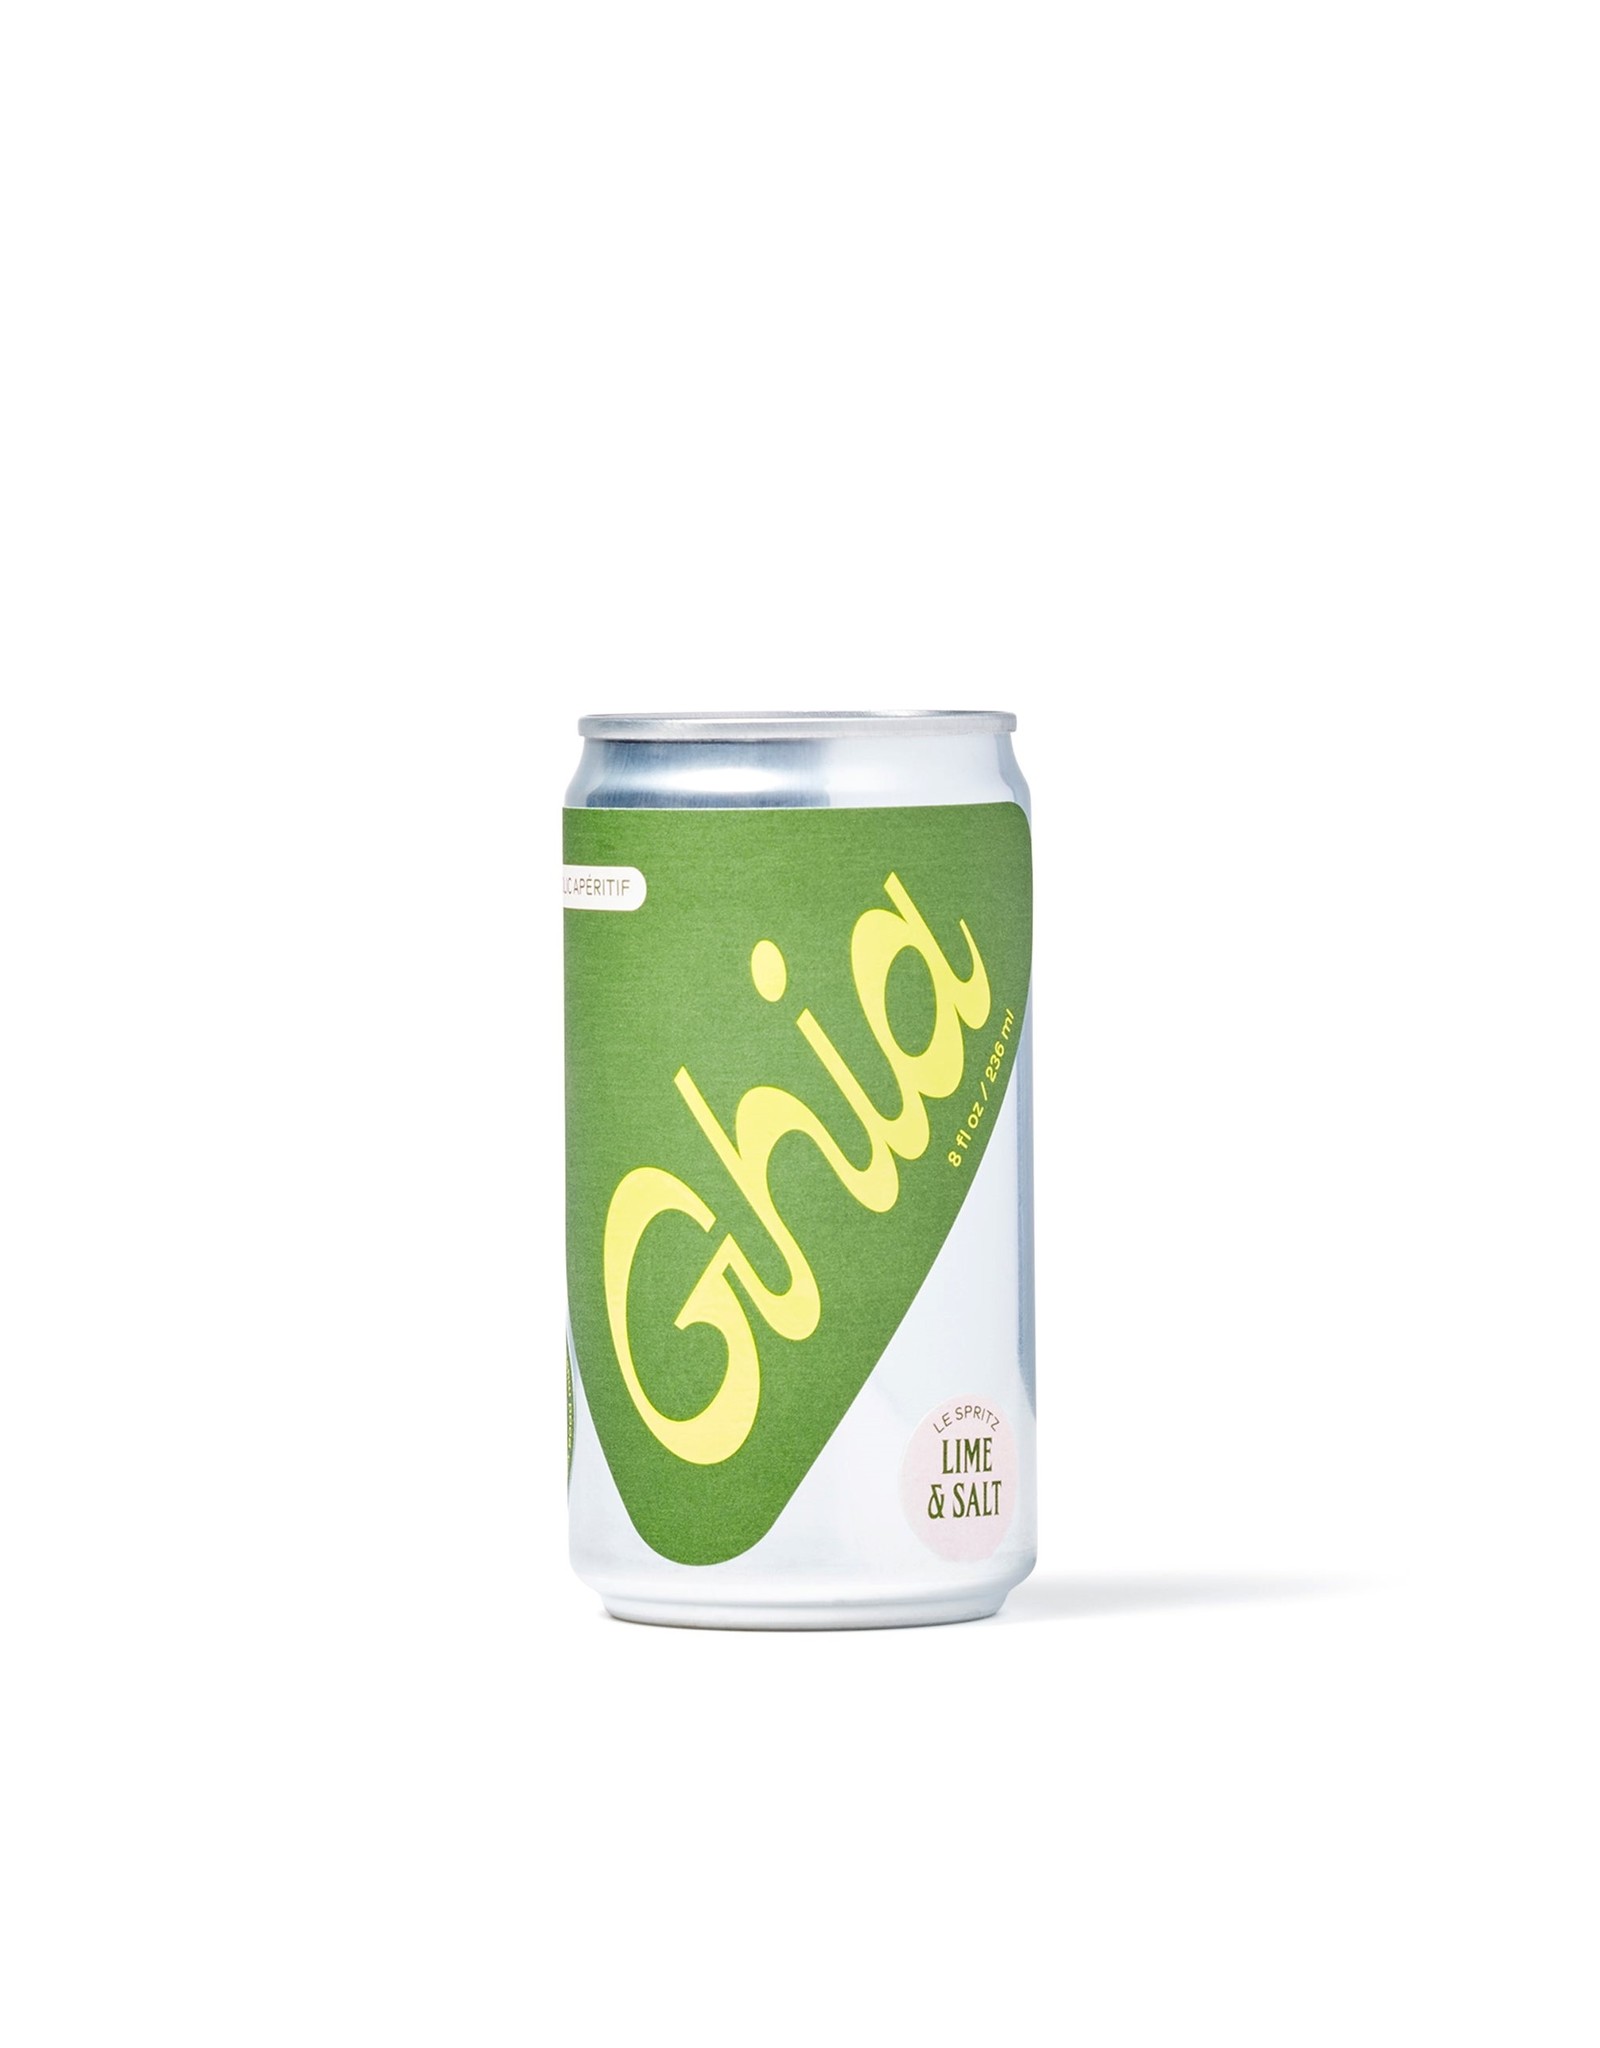 Ghia NA Lime Spritz Single Can